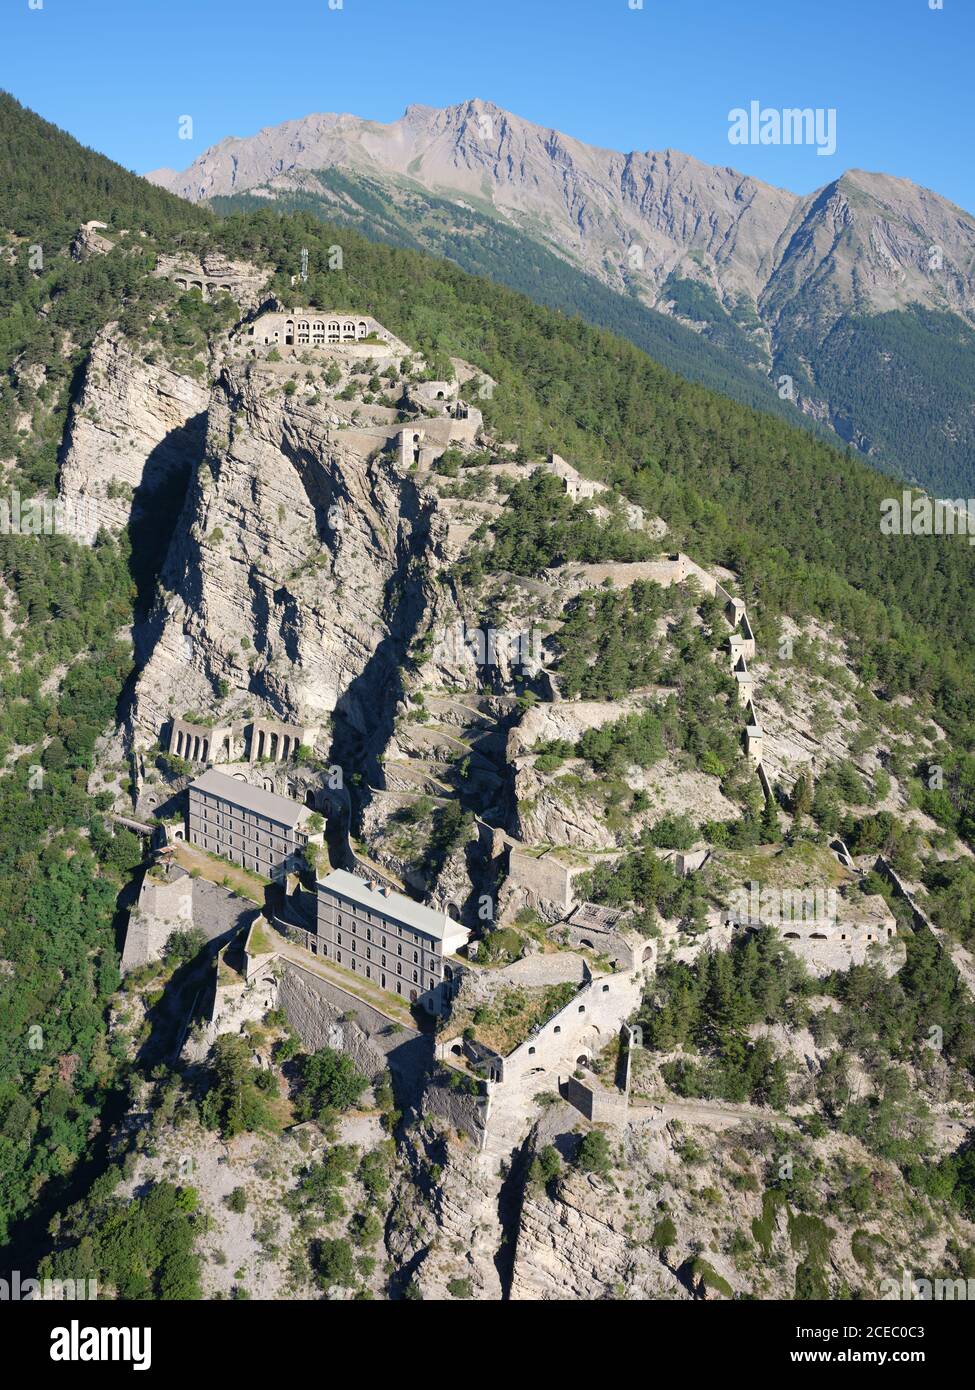 AERIAL VIEW. Fort de Tournoux, a military fortress above the Ubaye Valley, La Condamine-Châtelard, Alpes-de-Haute-Provence, France. Stock Photo